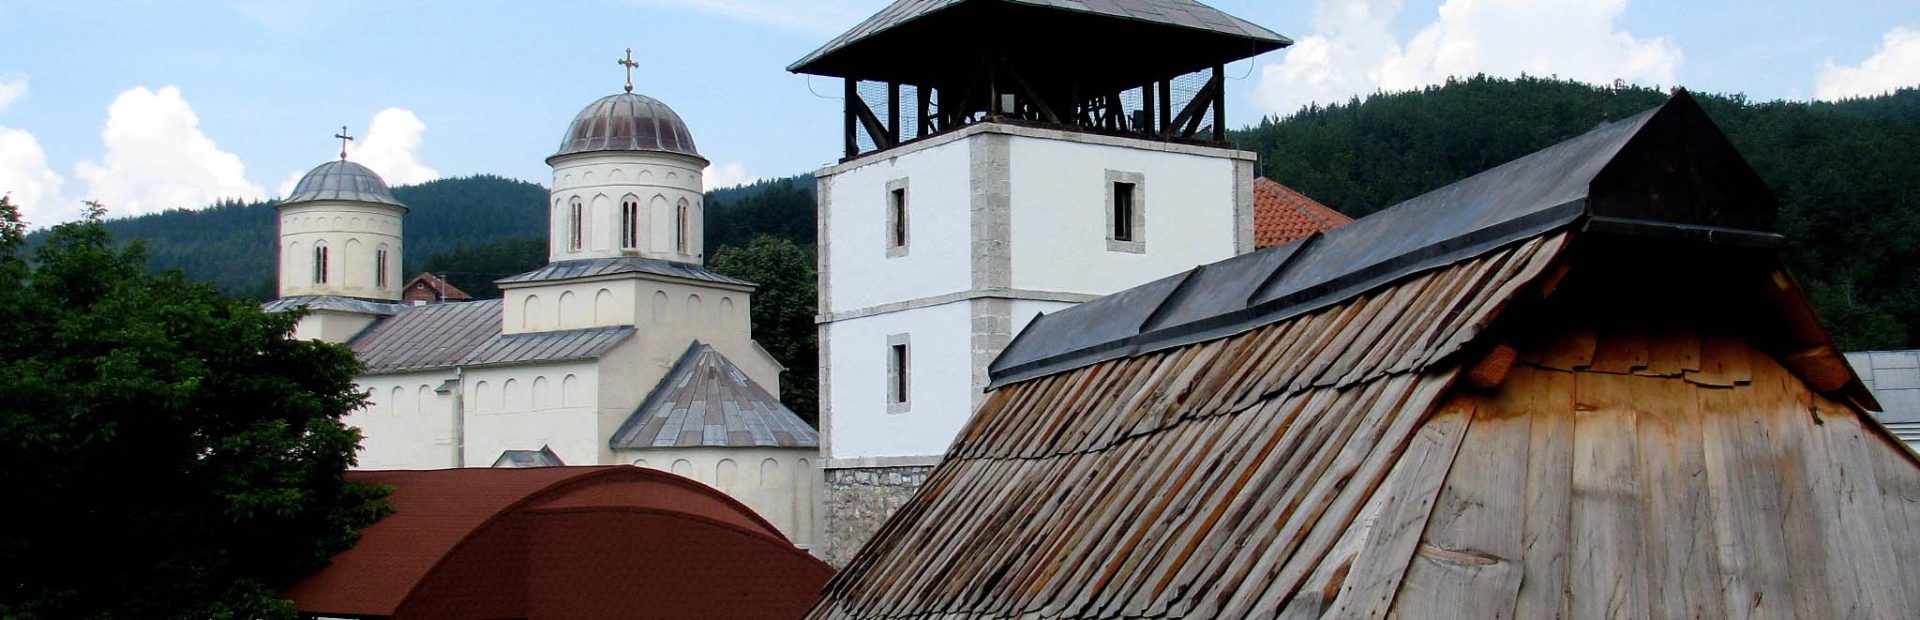 Serbia-travel-Mileseva-Monastery-Glimpses-of-The-World